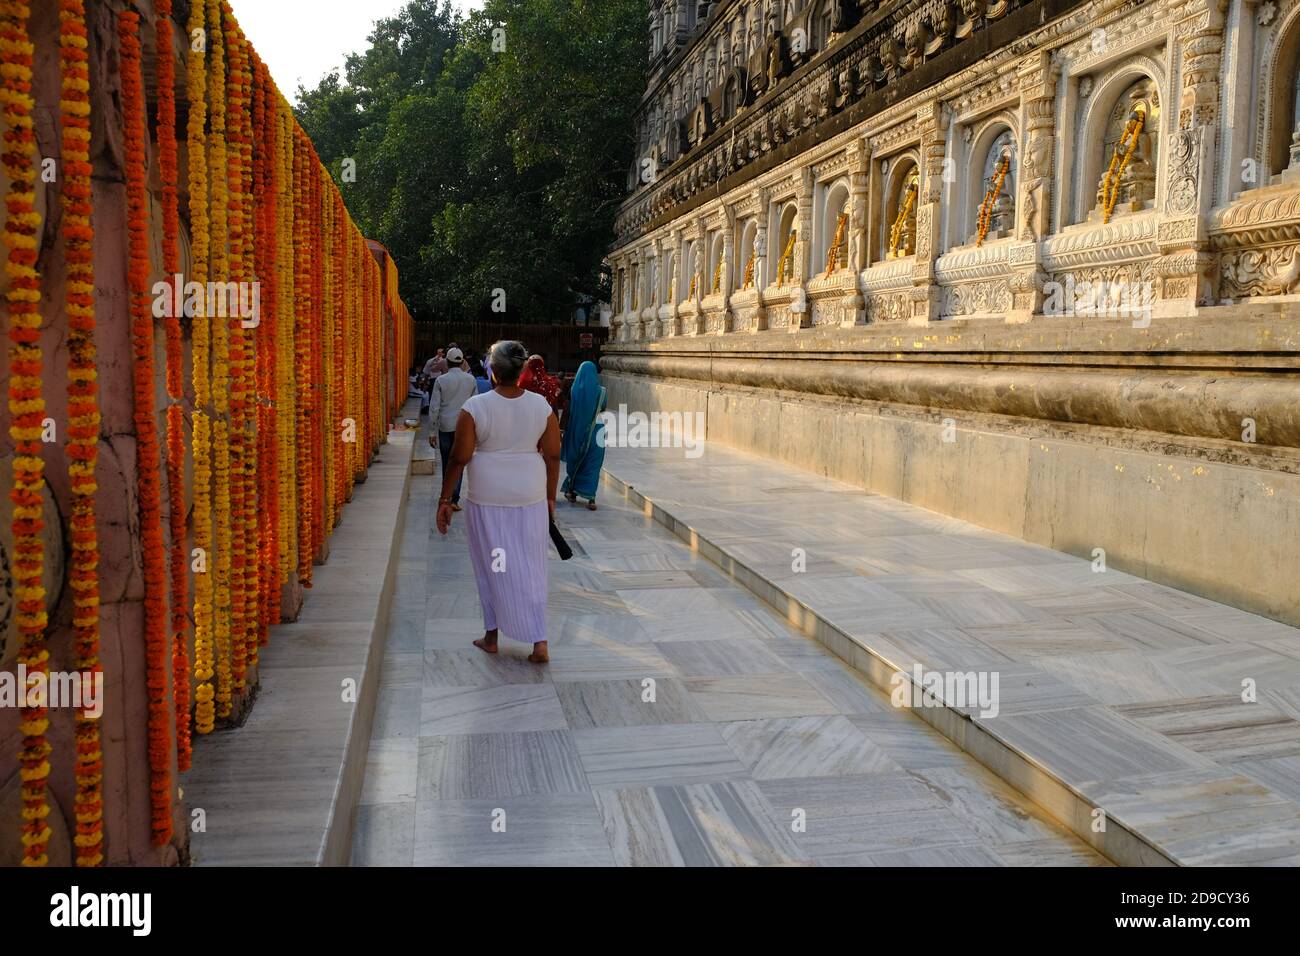 India Bodh Gaya - Mahabodhi Temple Complex walking around path of the Main Temple Stock Photo